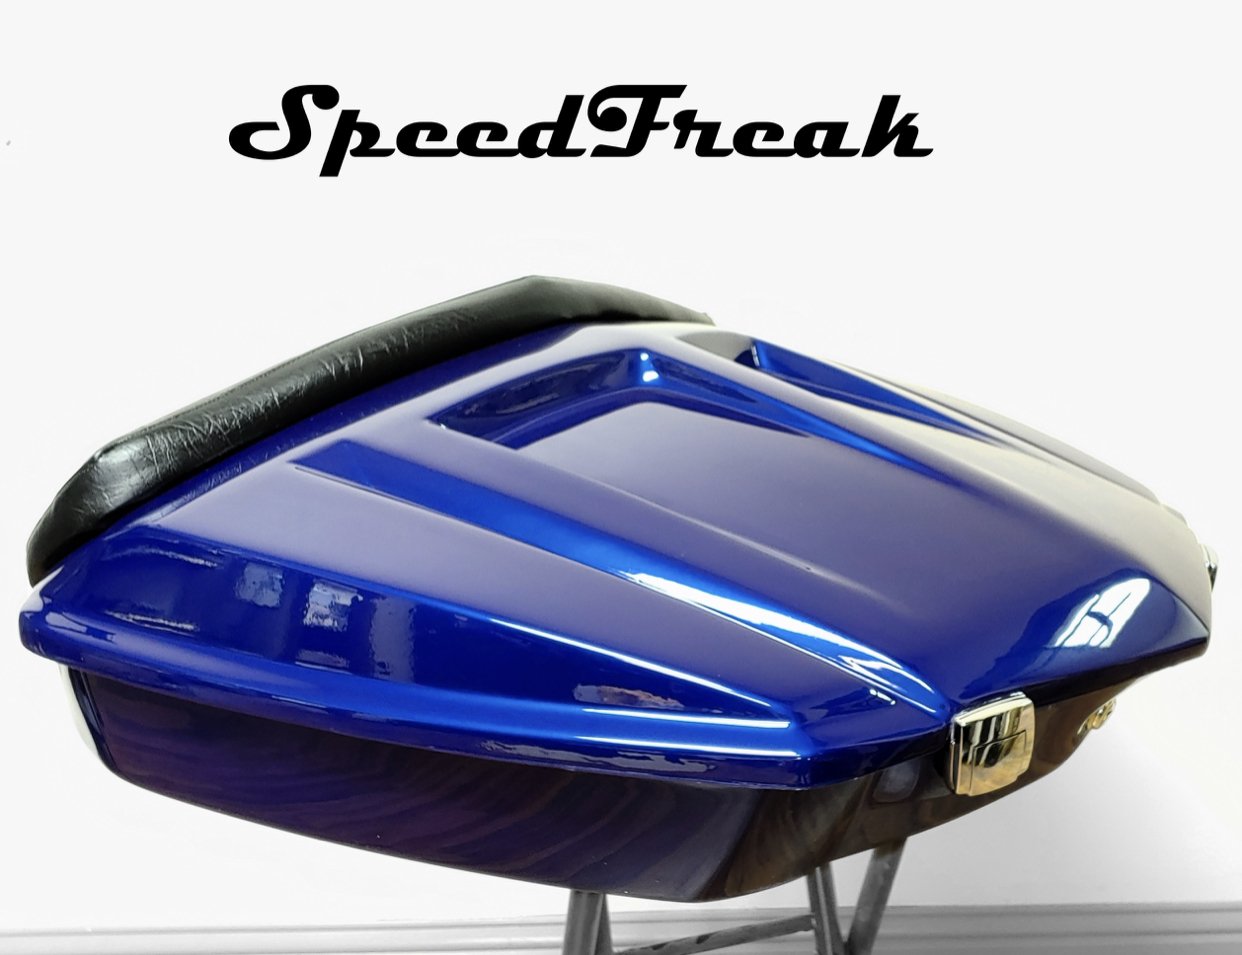 Motorcycle Trunk - The "Speed Freak" CHOPPED Custom Razr Trunk is Universal Fitment